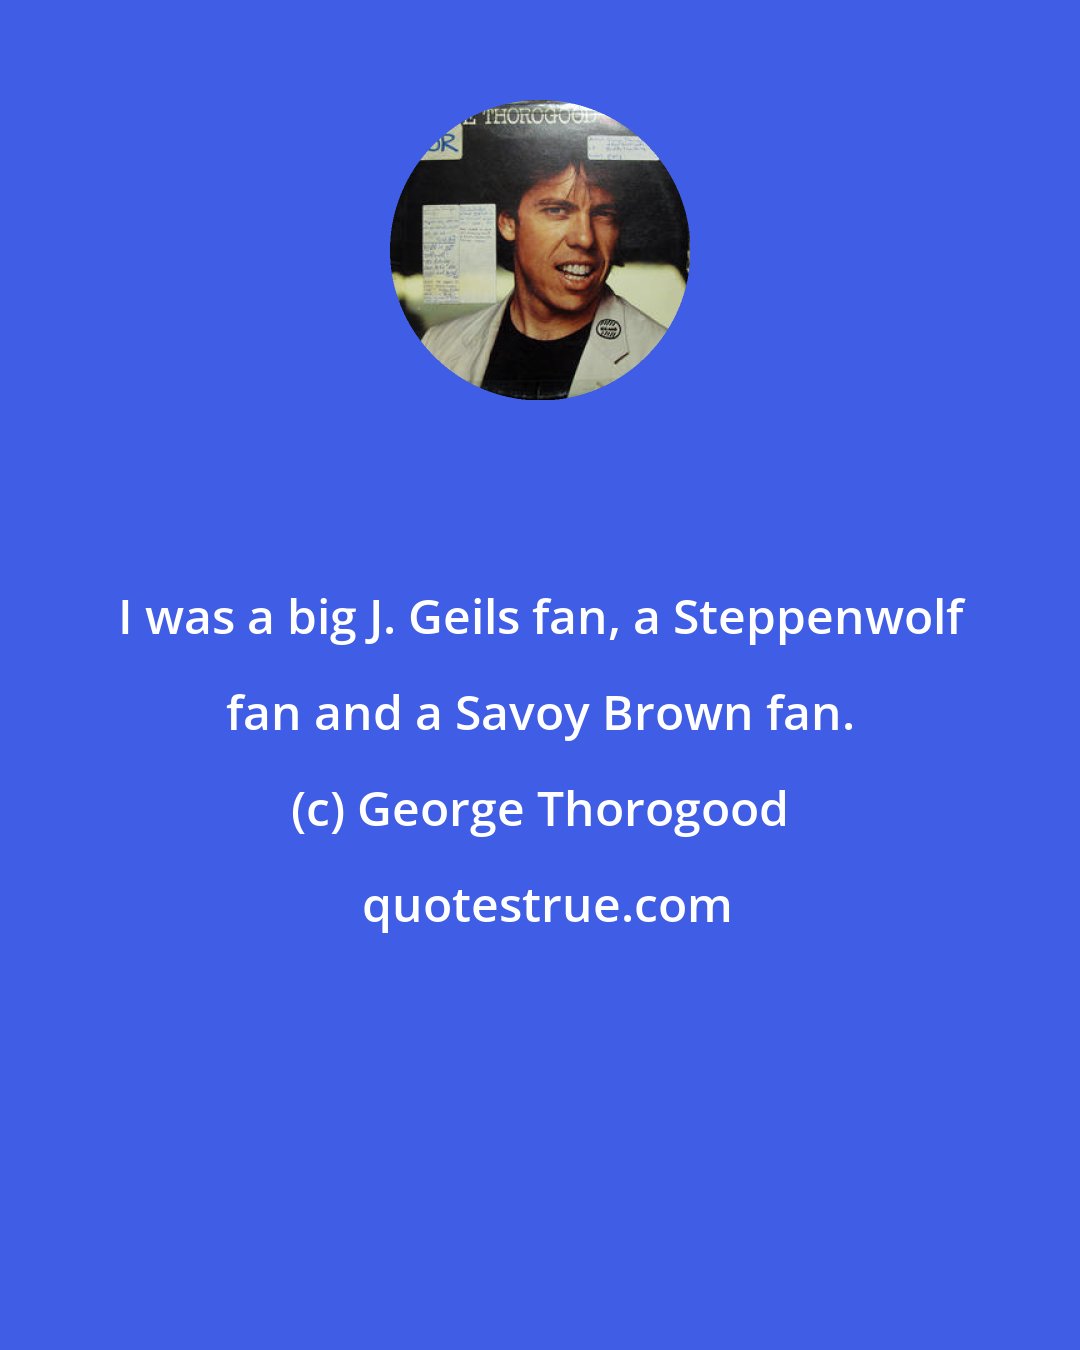 George Thorogood: I was a big J. Geils fan, a Steppenwolf fan and a Savoy Brown fan.